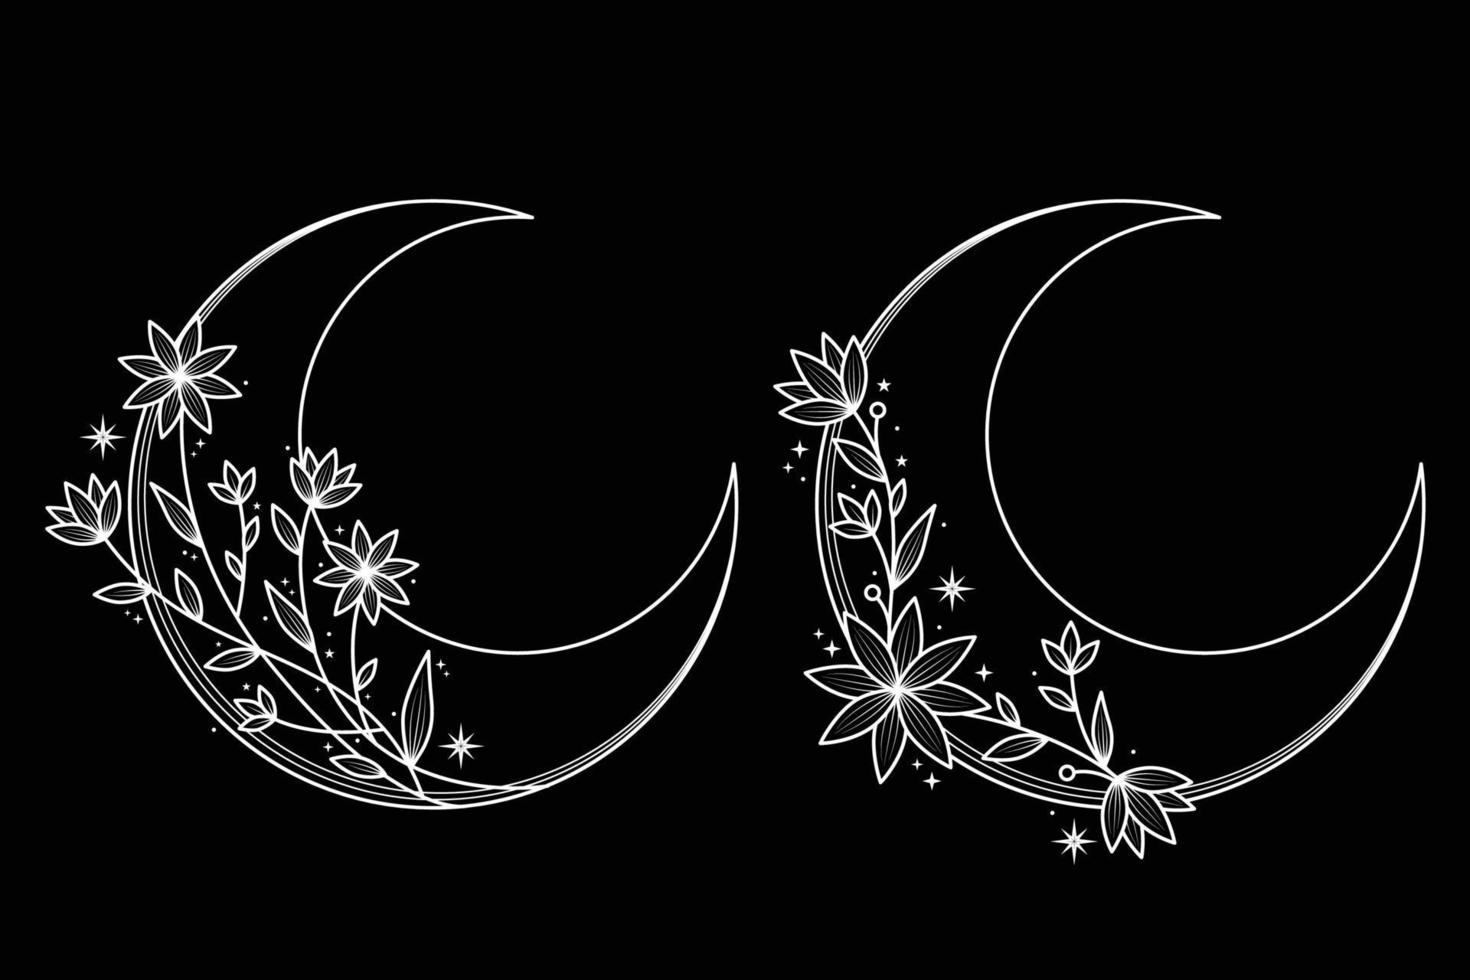 monochrome floral moon logo design set vector